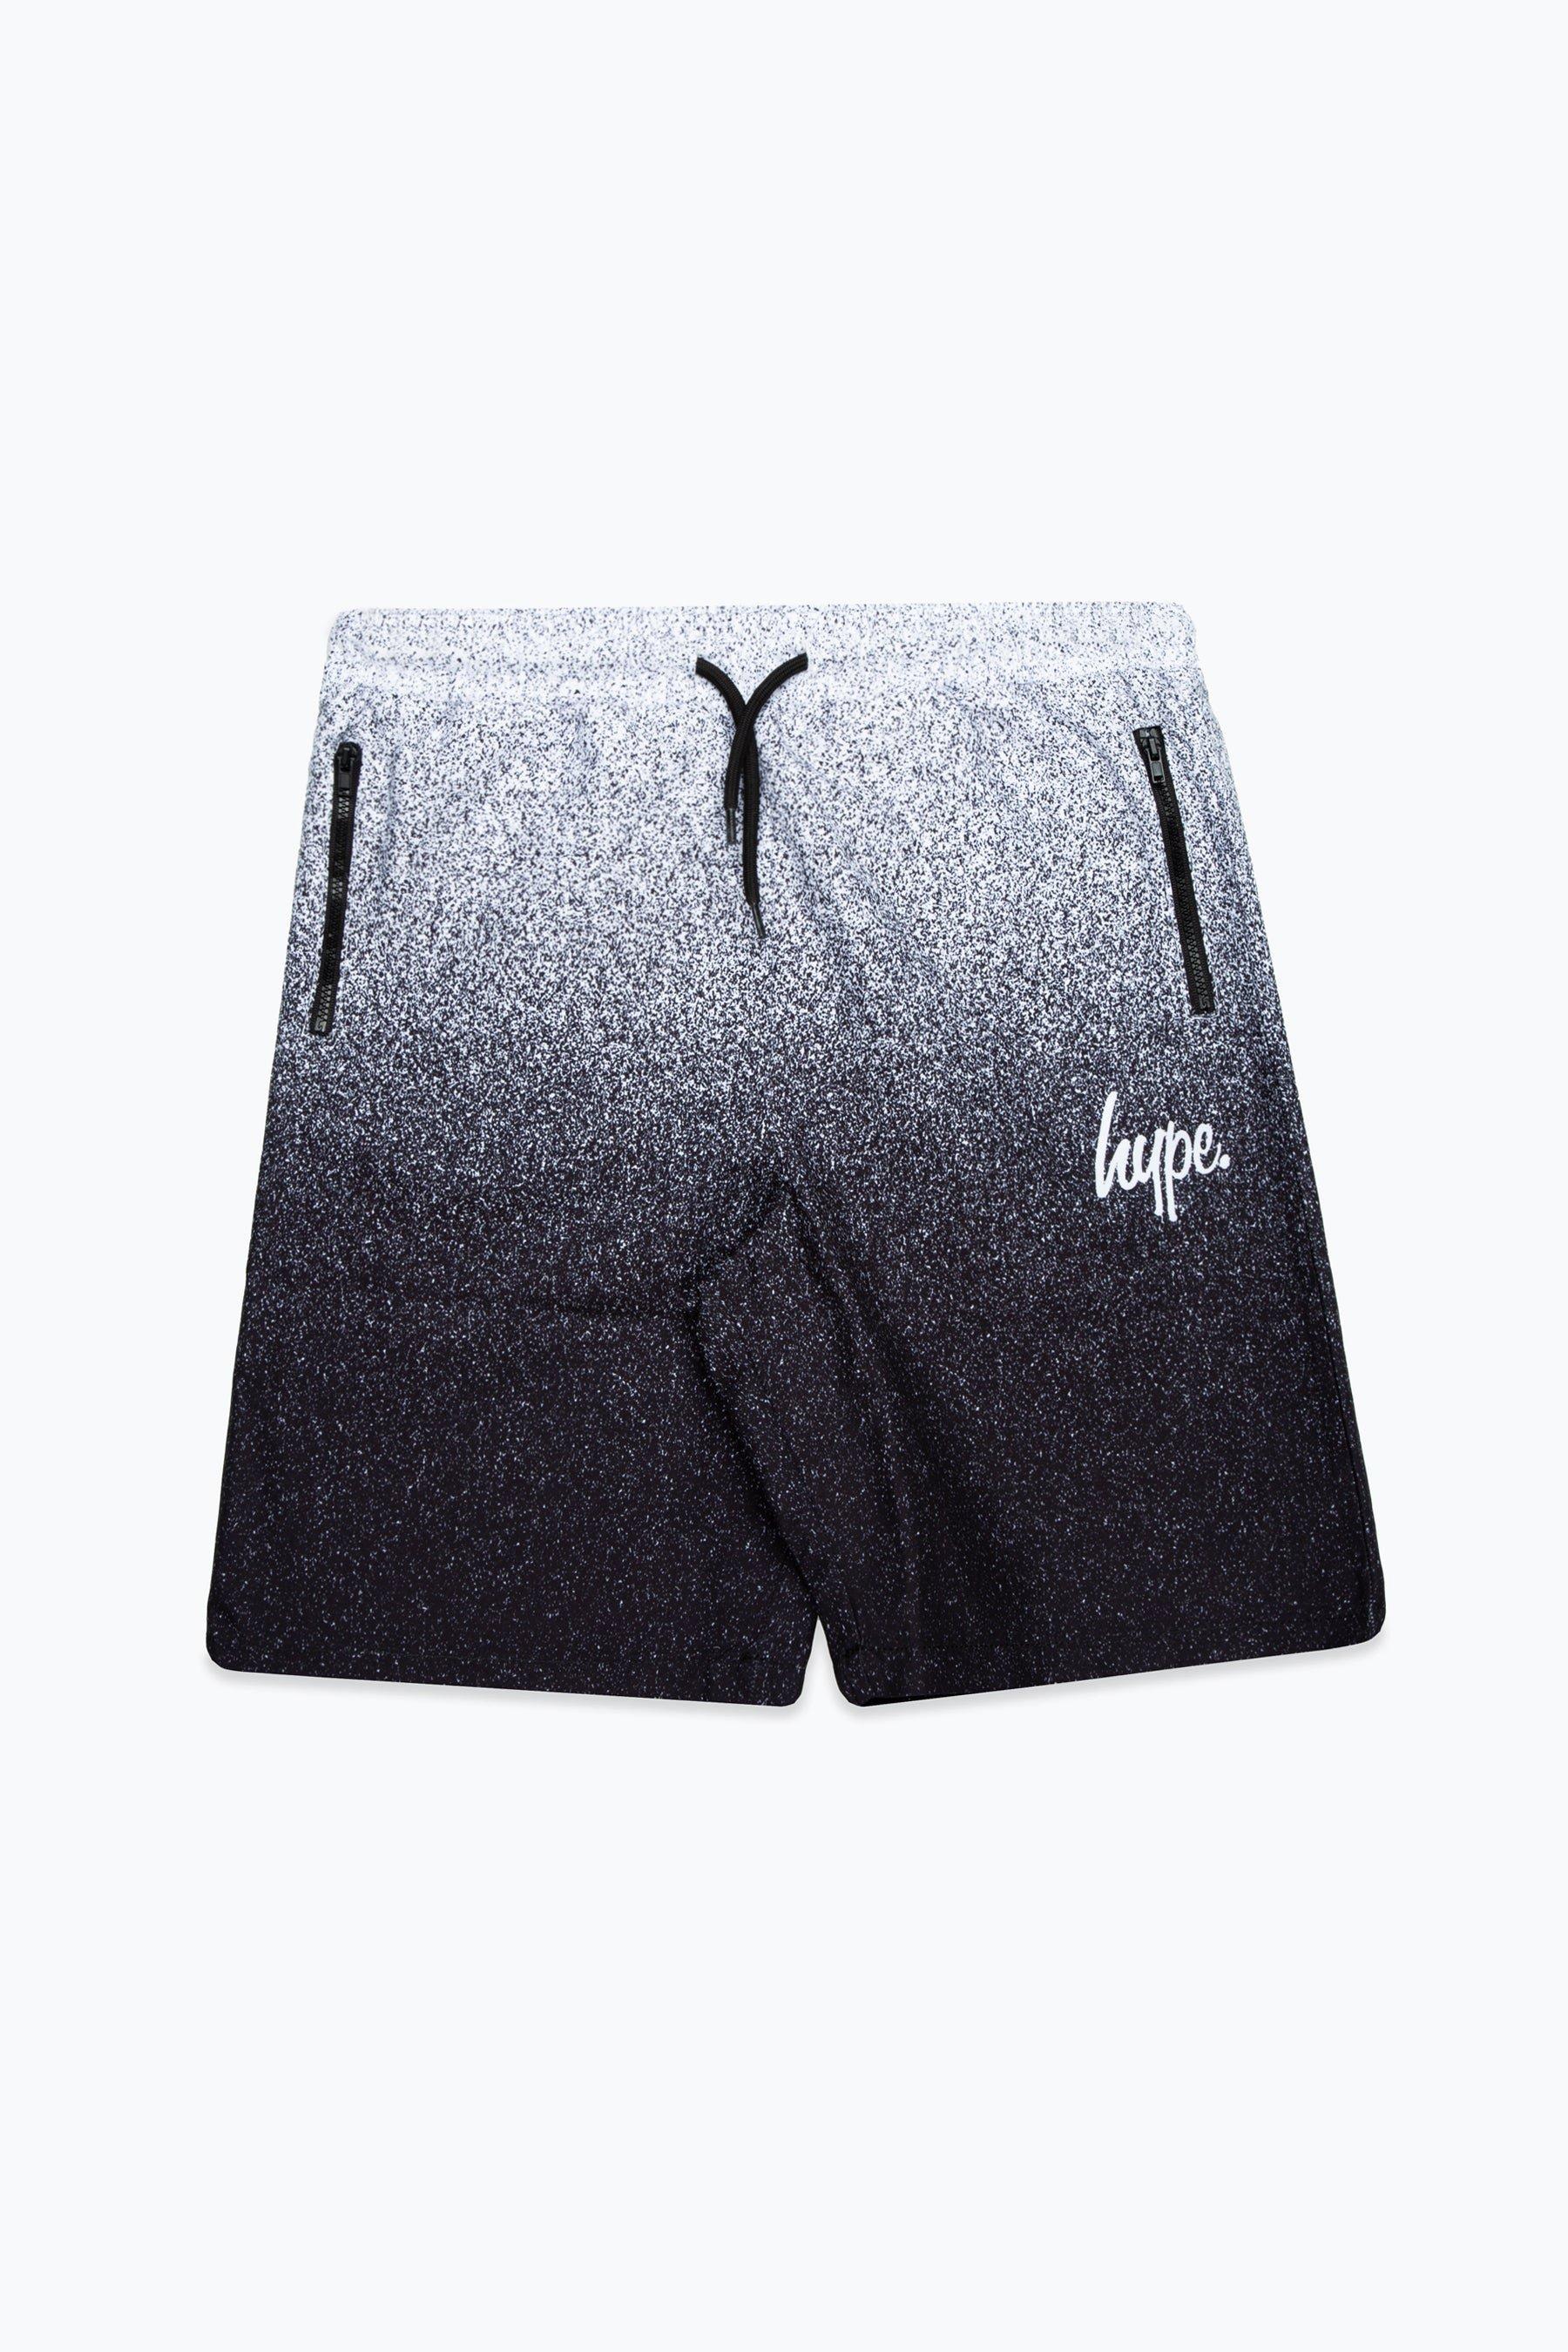 Speckle Fade Luxe Board Shorts